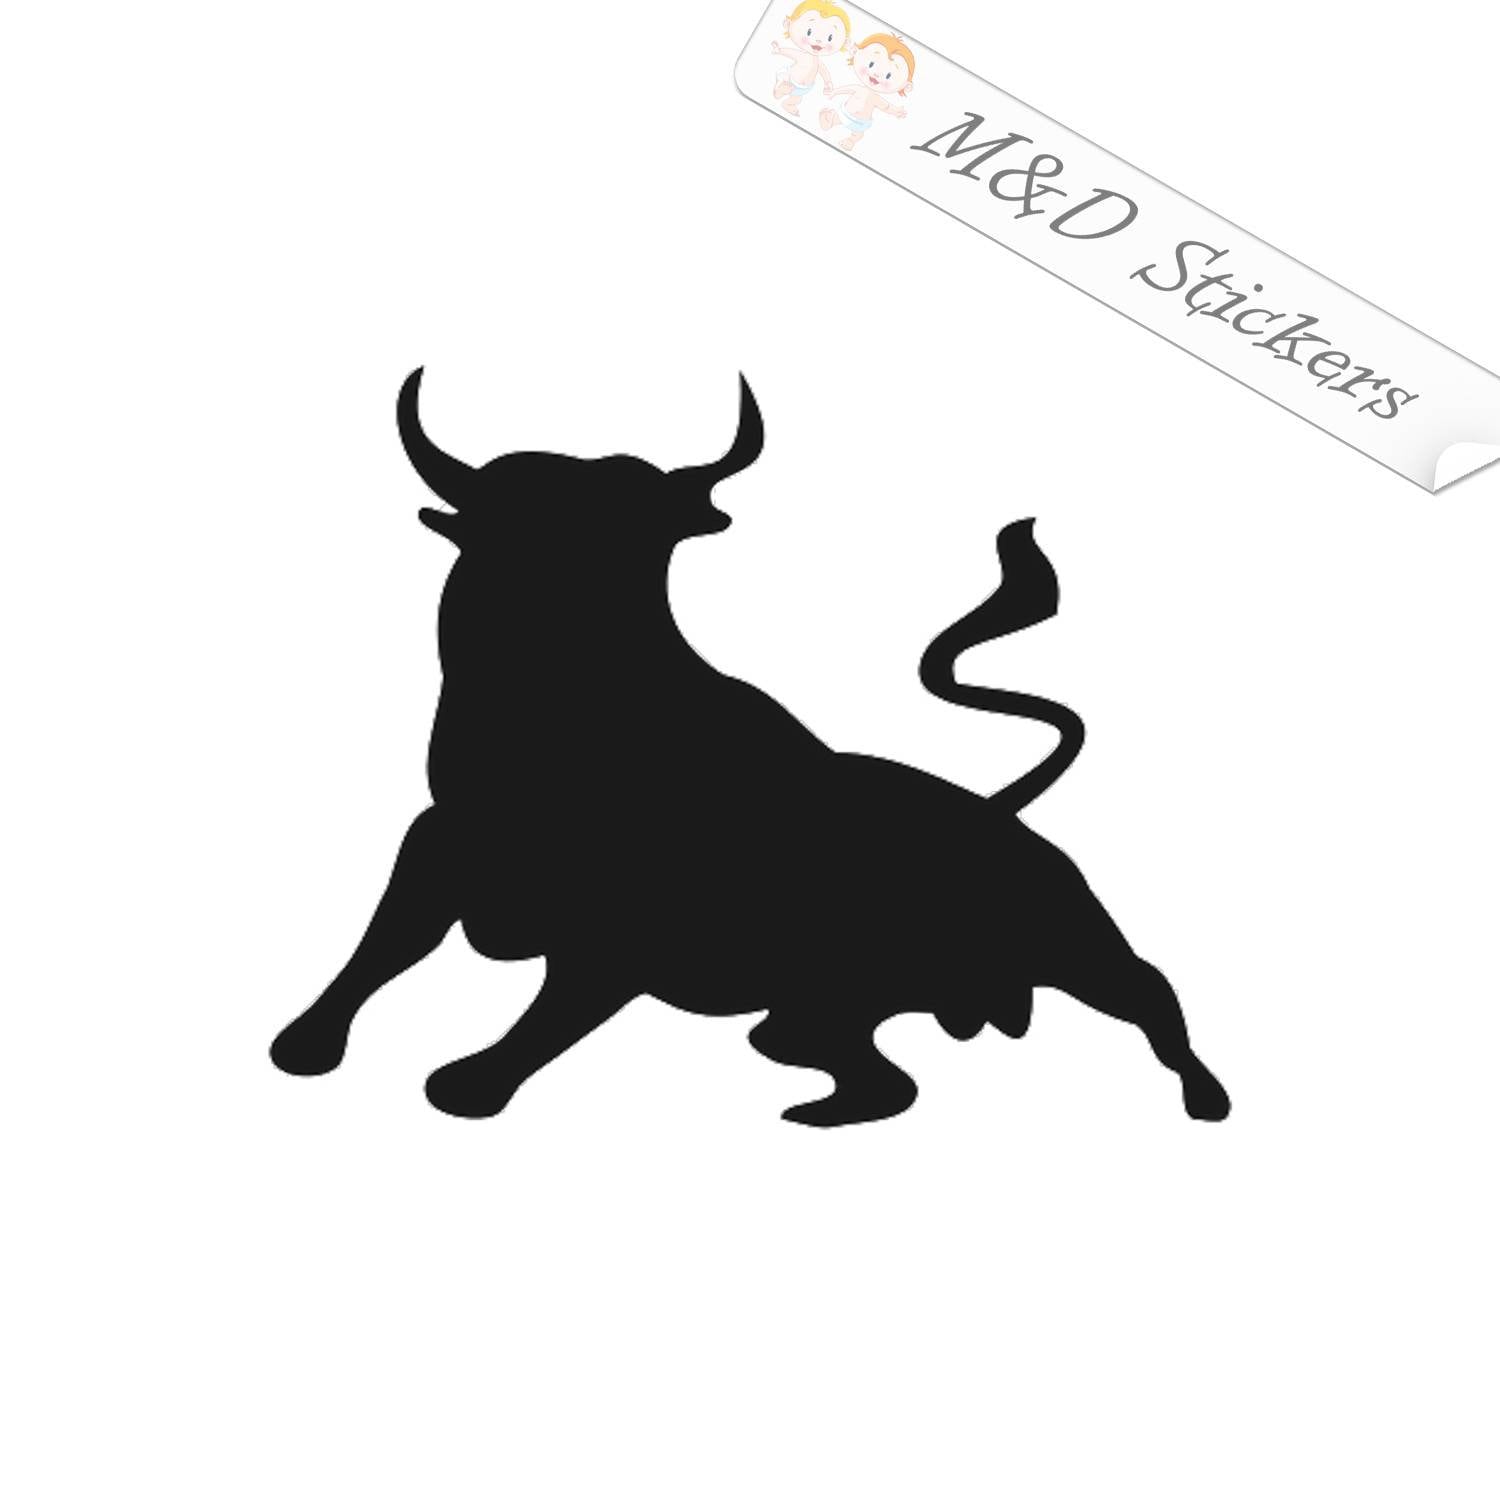 Bull Shaped Spanish Flag Sticker Decal - Self Adhesive Vinyl - Weatherproof  - Made in USA - espana spain toro matador bull fighter 